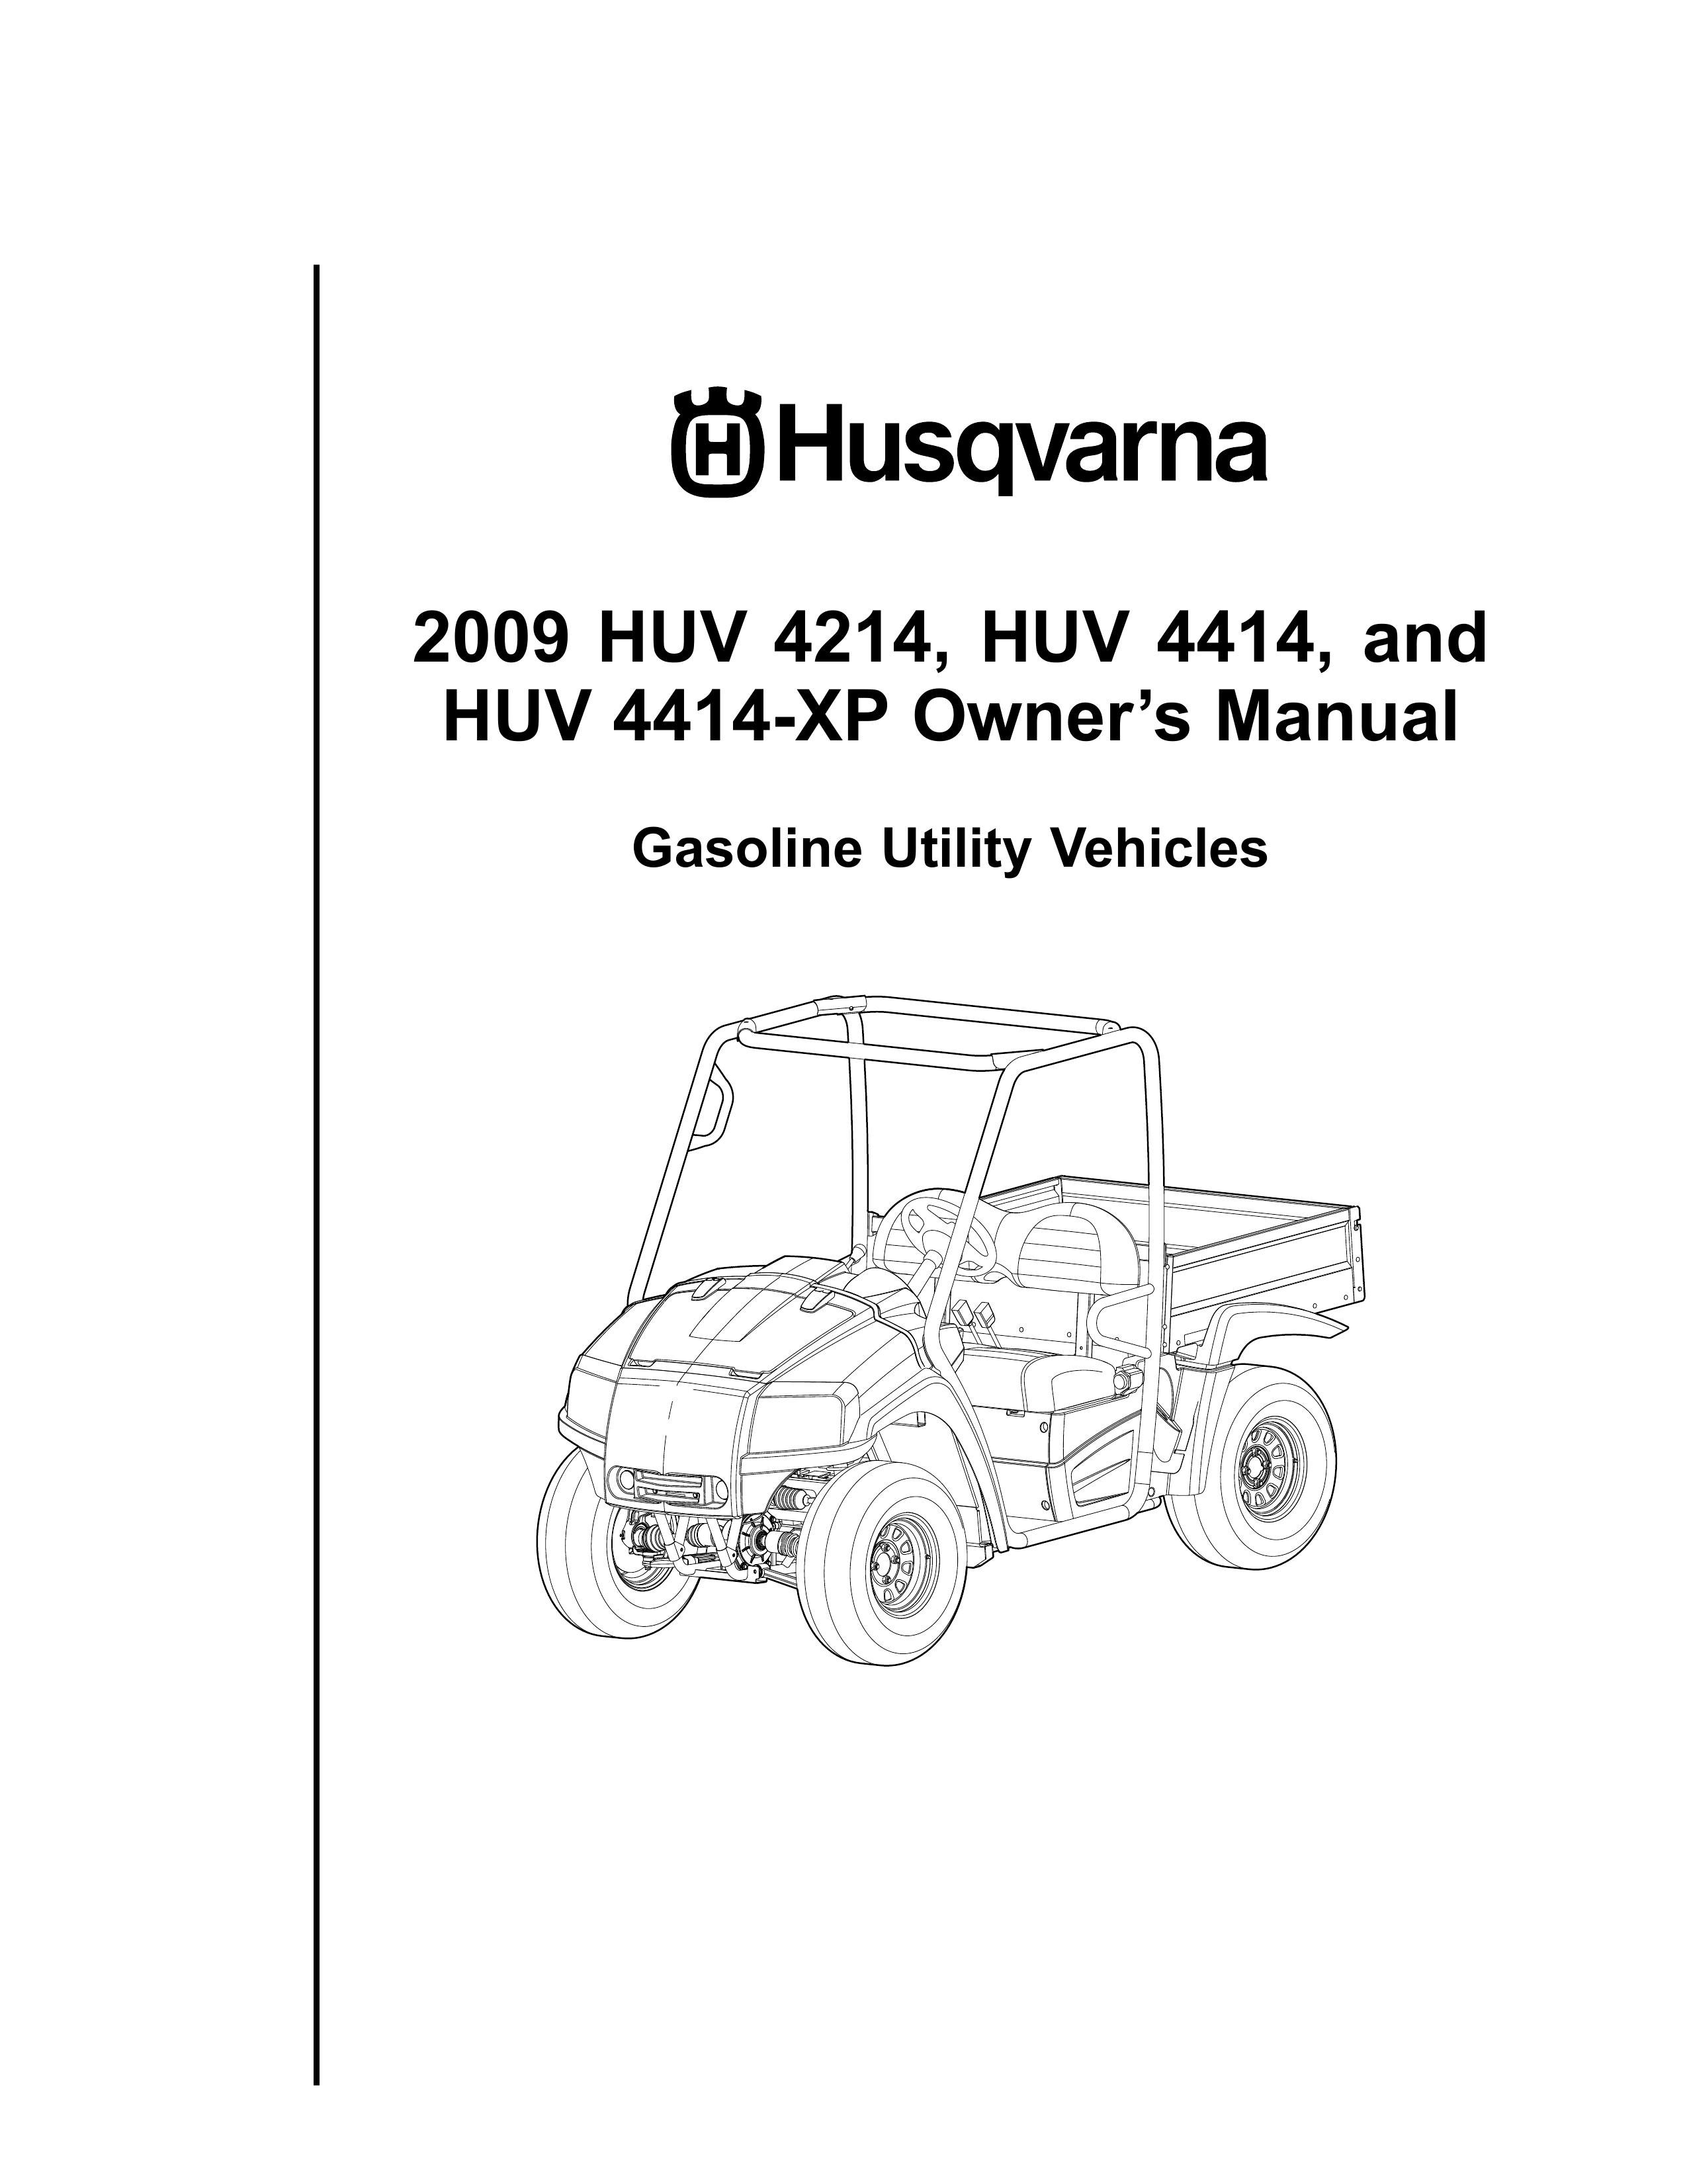 Husqvarna HUV 4214 Utility Vehicle User Manual